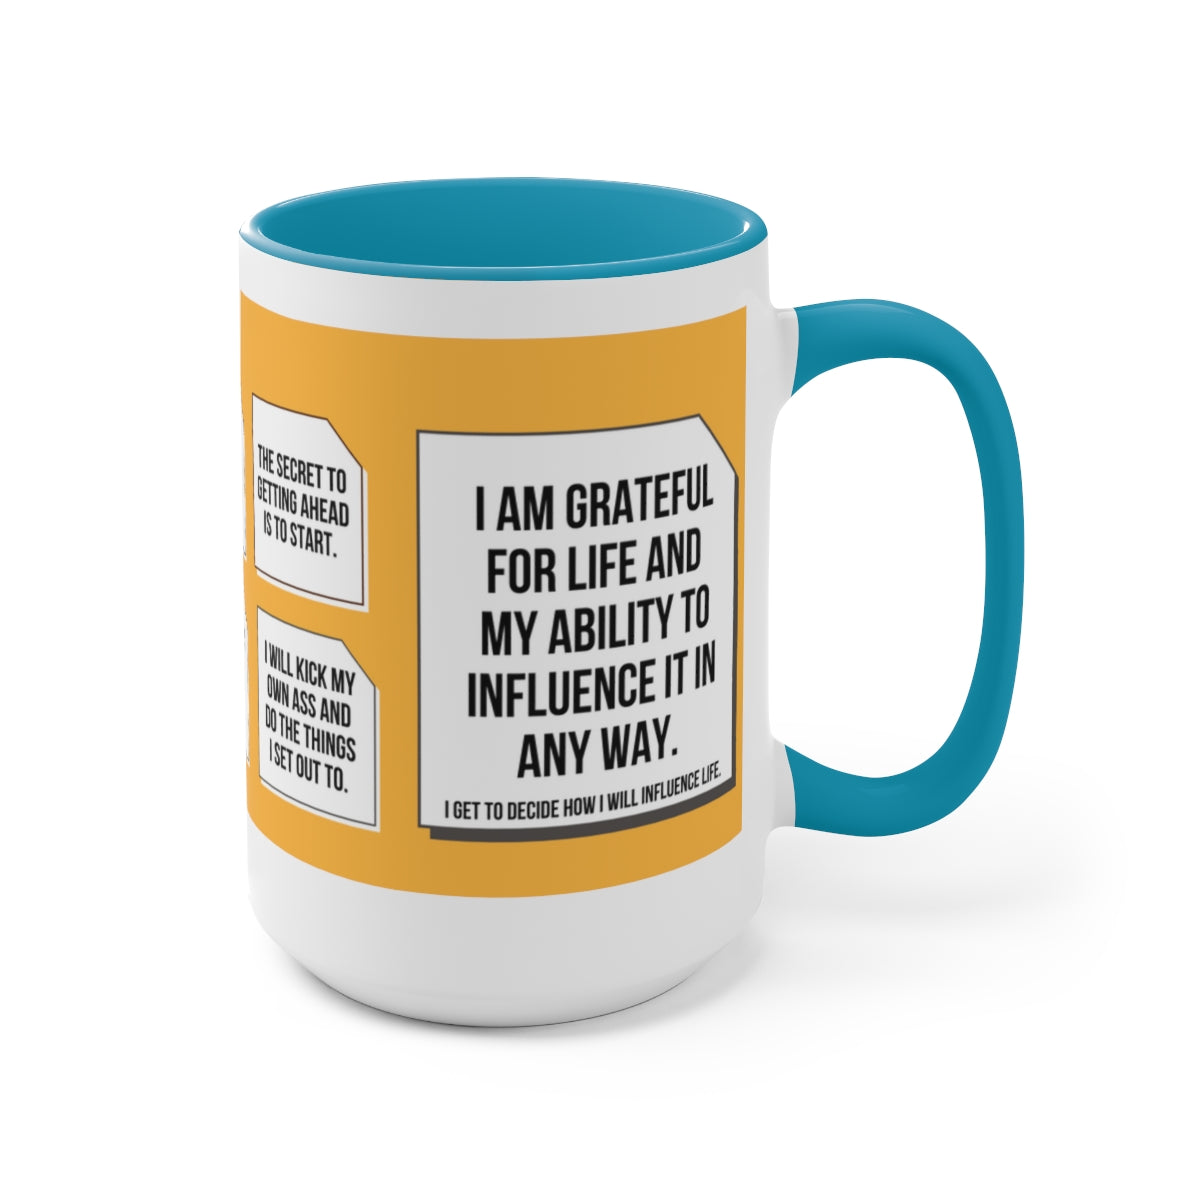 Daily Reminders Coffee Mug | Sticky Notes on Mug | Motivational Mug gifts | Best Mugs to Gift